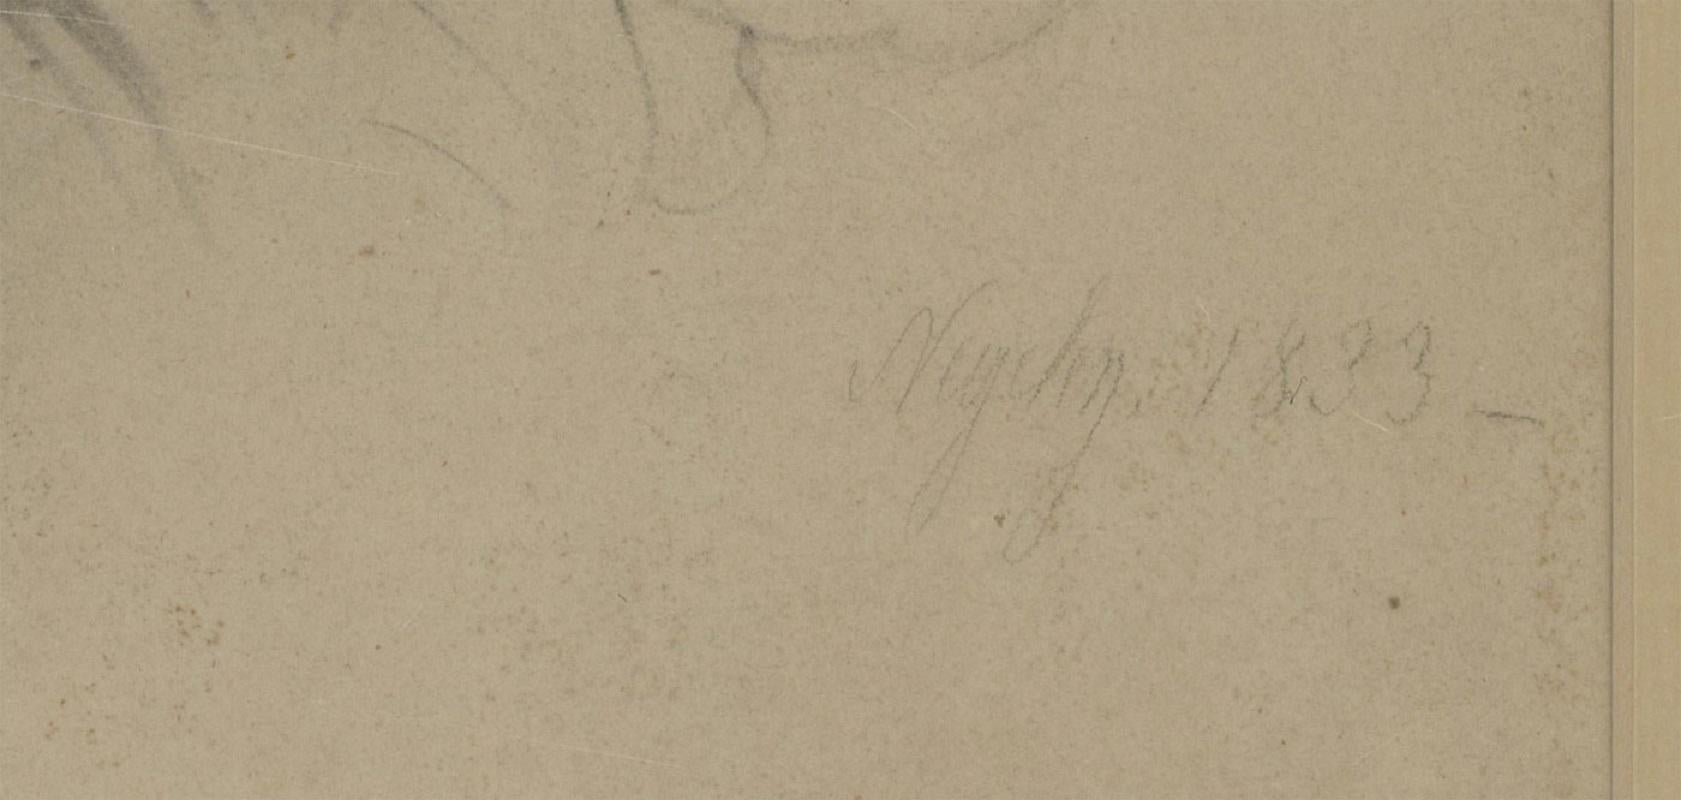 Joseph Mathias Negelen (1792-1870) - 1833 Charcoal Drawing, Lady in a Bonnet 2